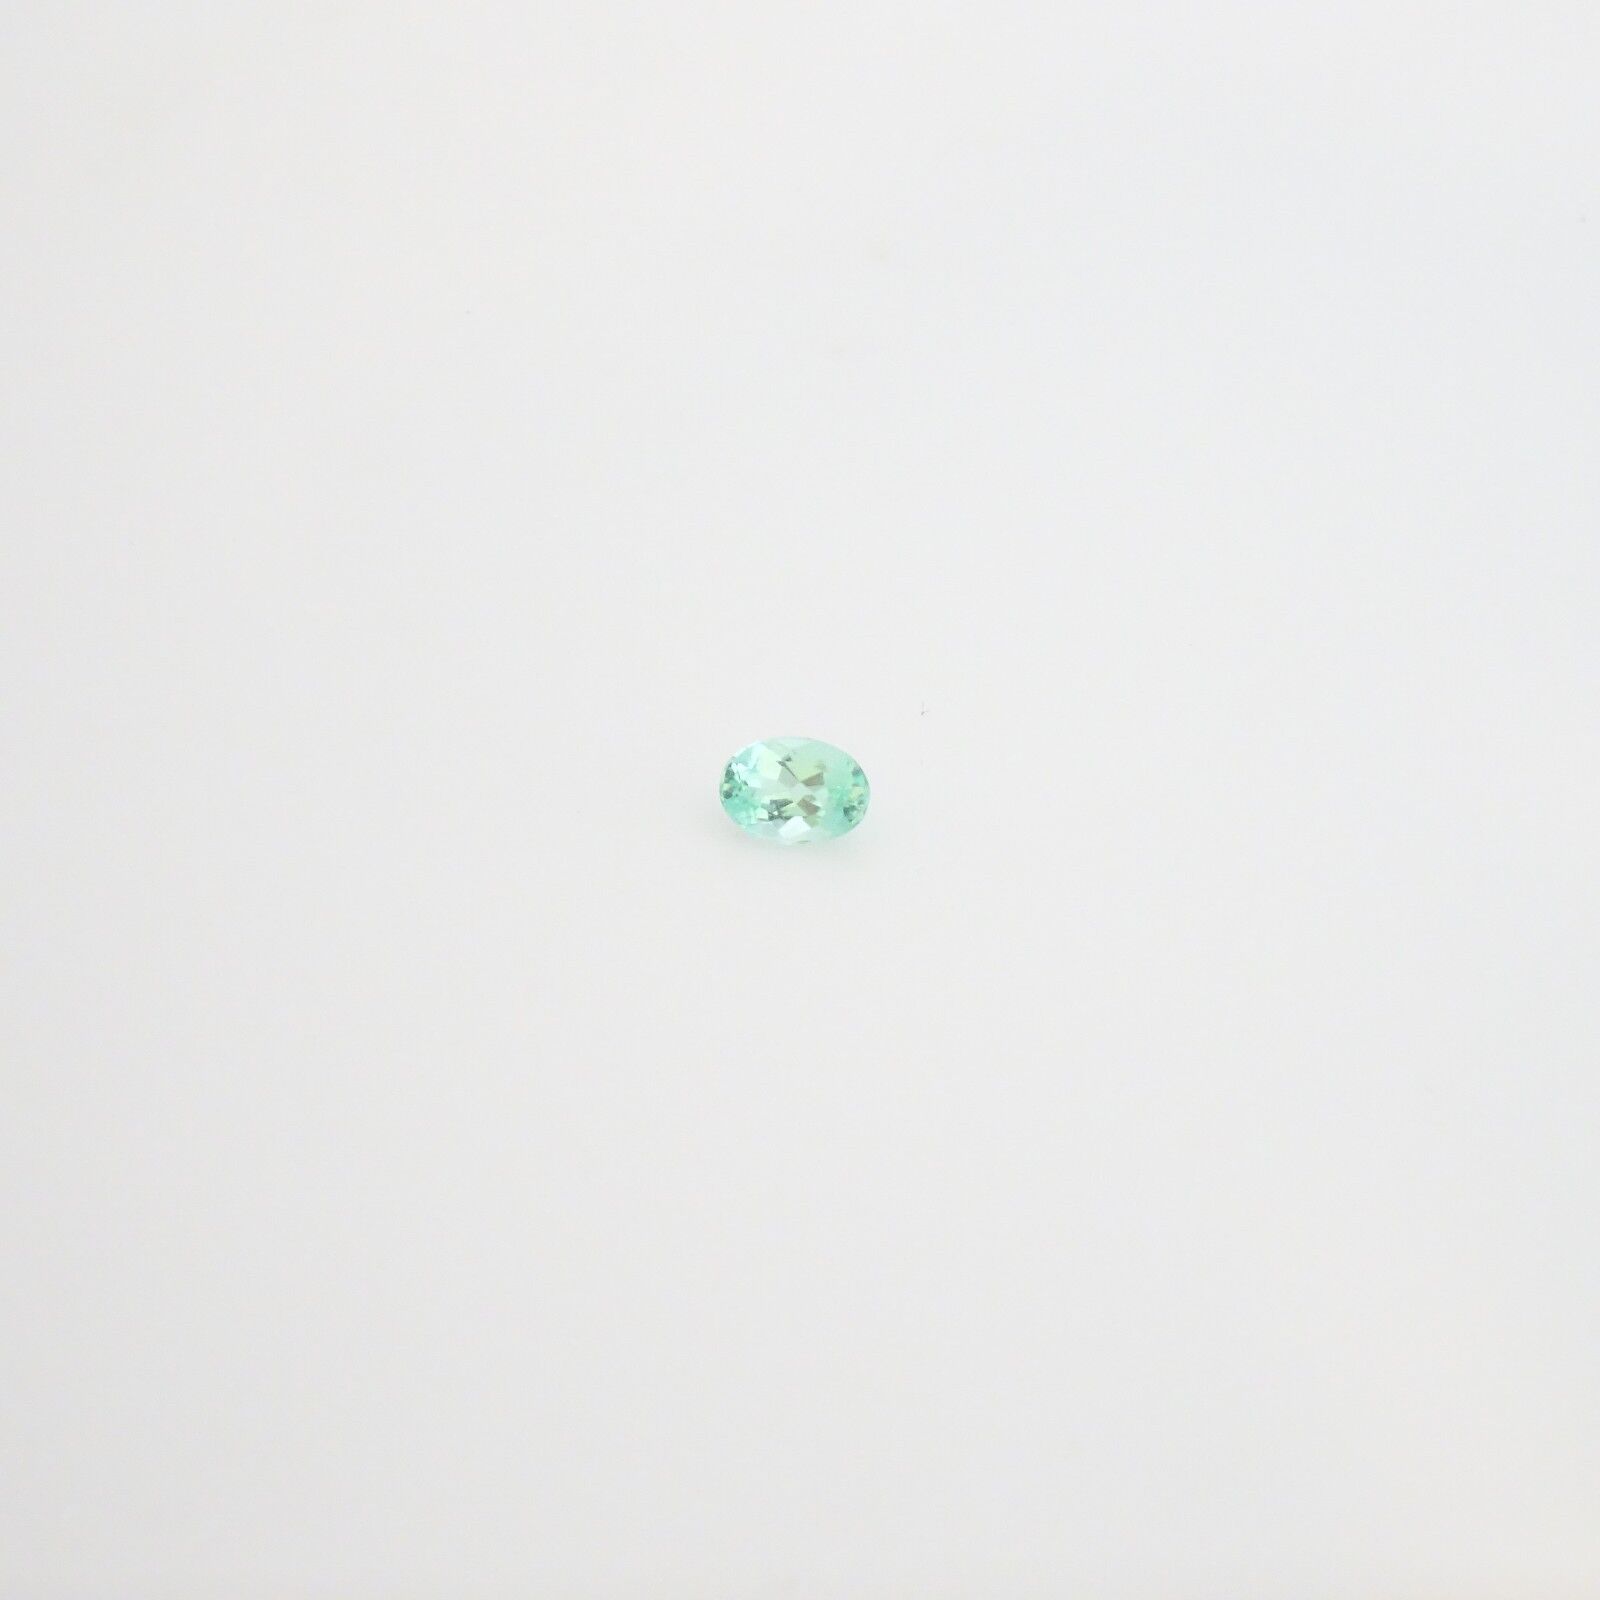 Paraiba - Copper Bearing - Tourmaline - 0.80ct Oval cut - 7x5mm - Loose Gemstone Paraiba - фотография #7